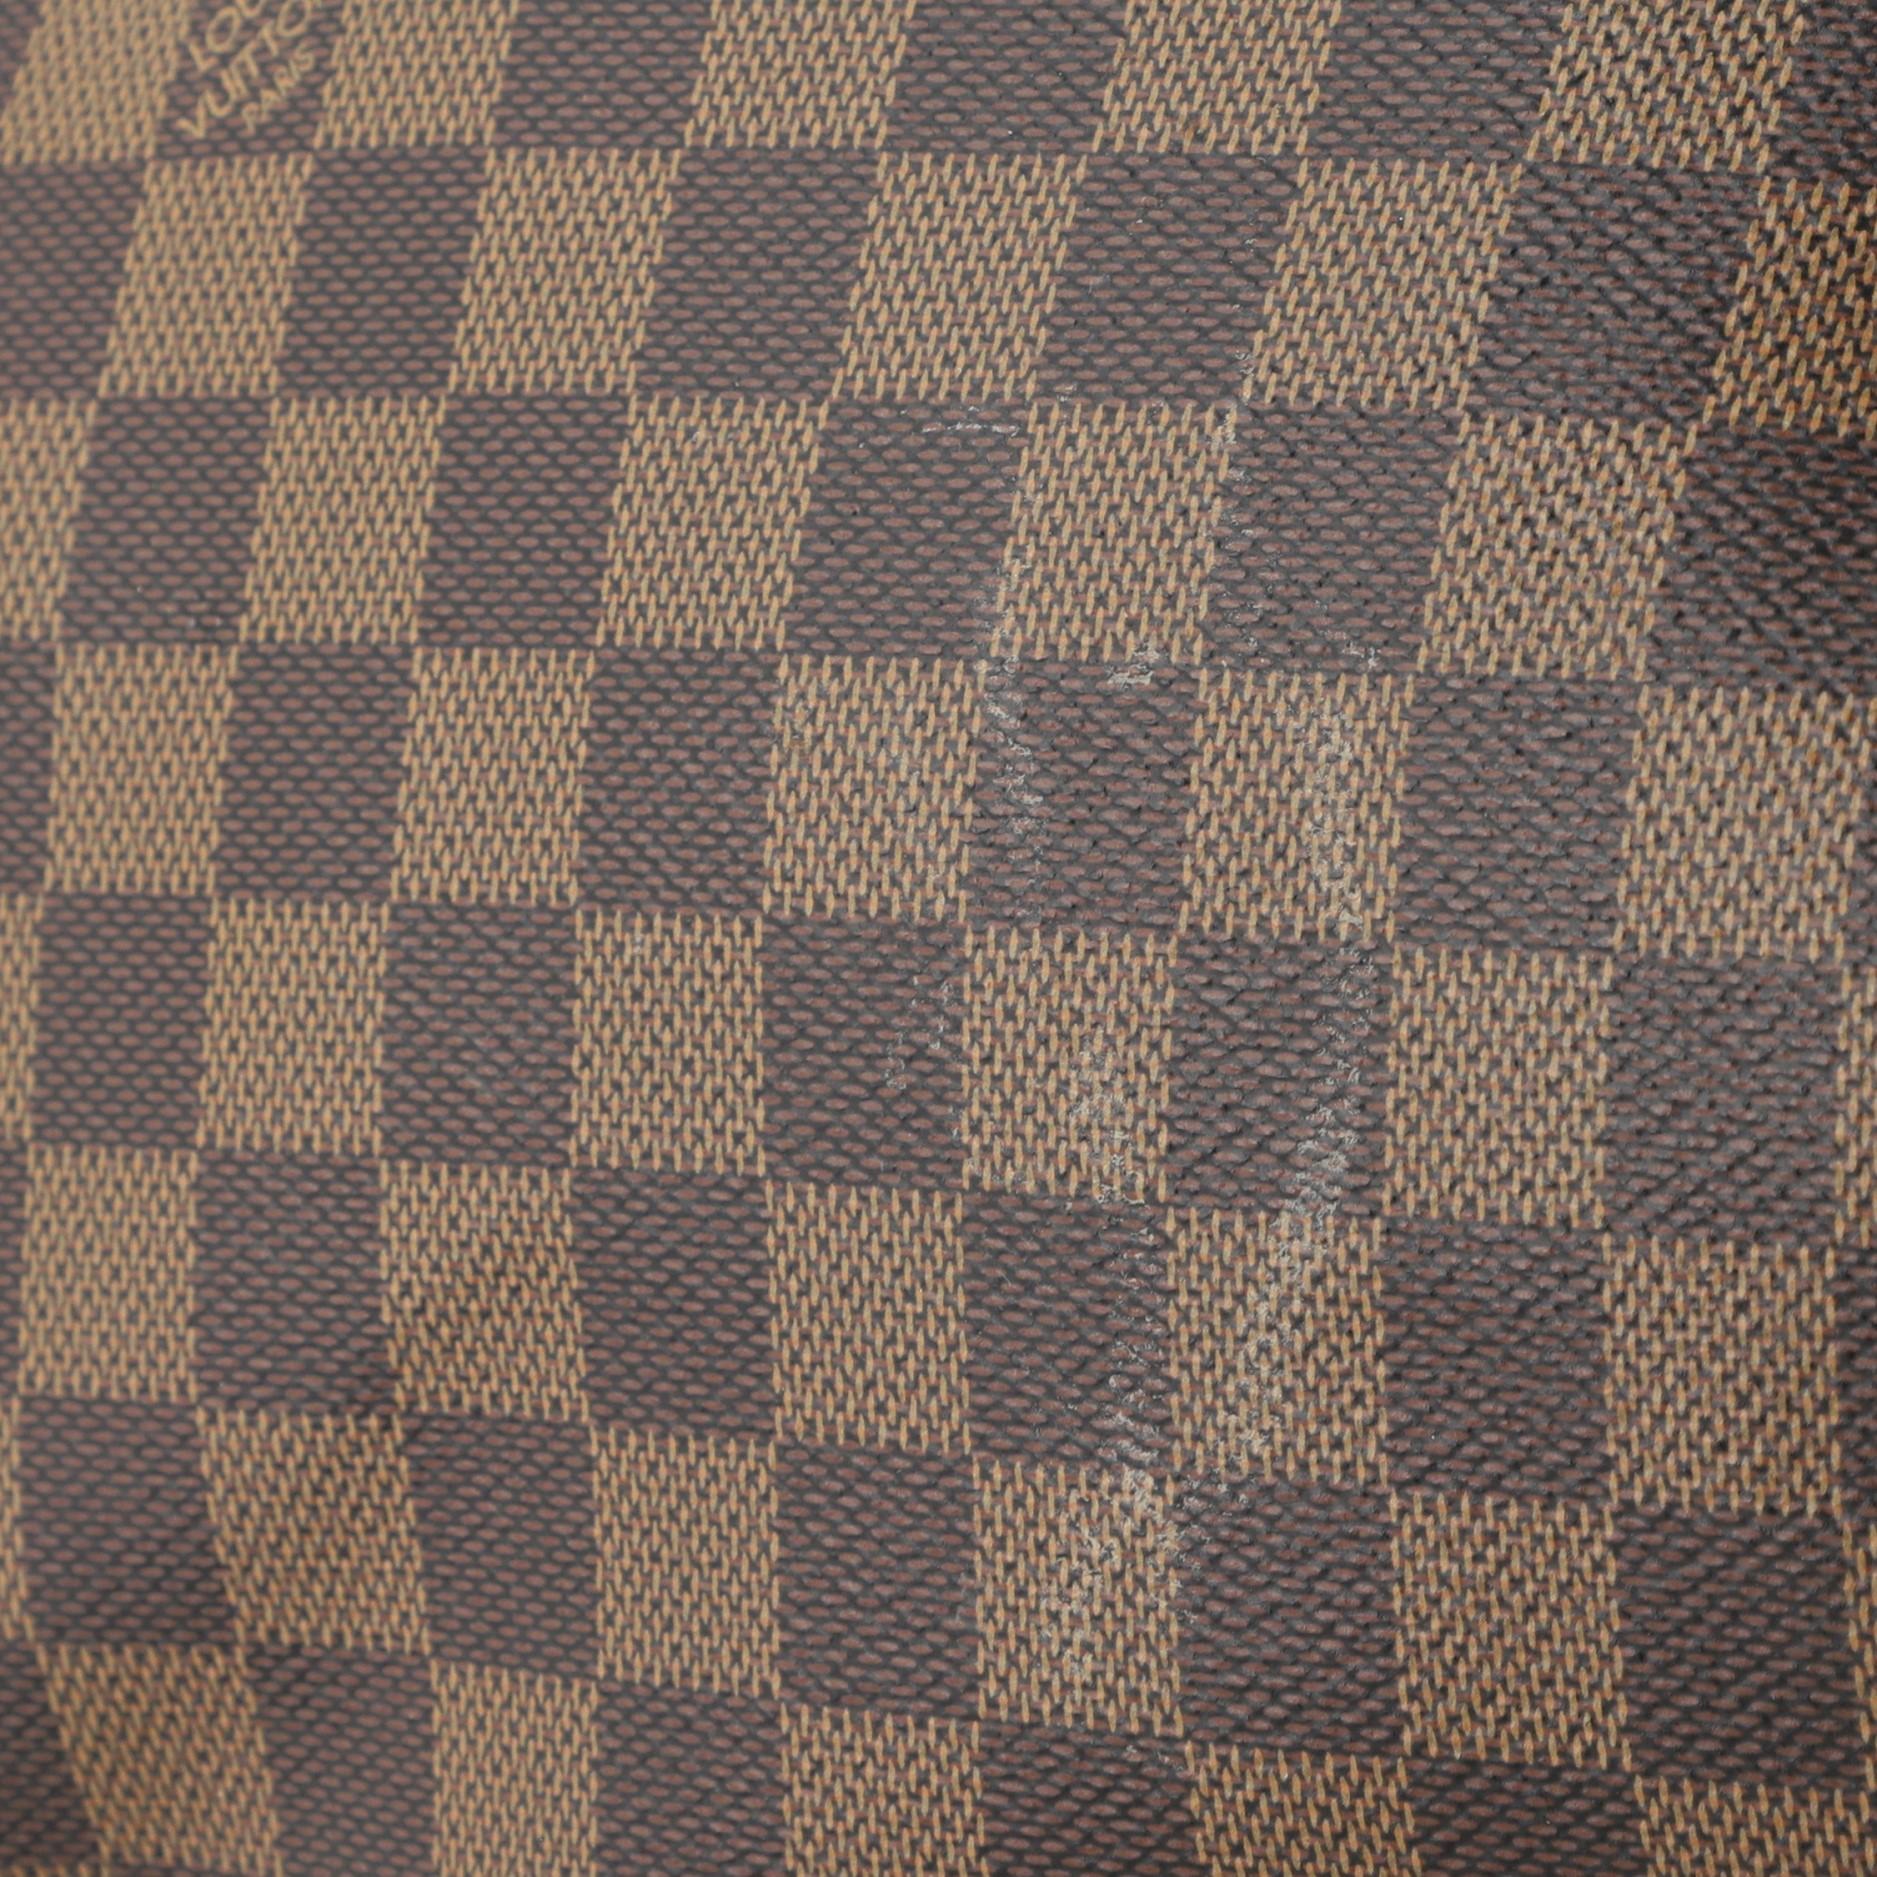 Louis Vuitton Speedy Bandouliere Bag Damier 30 2